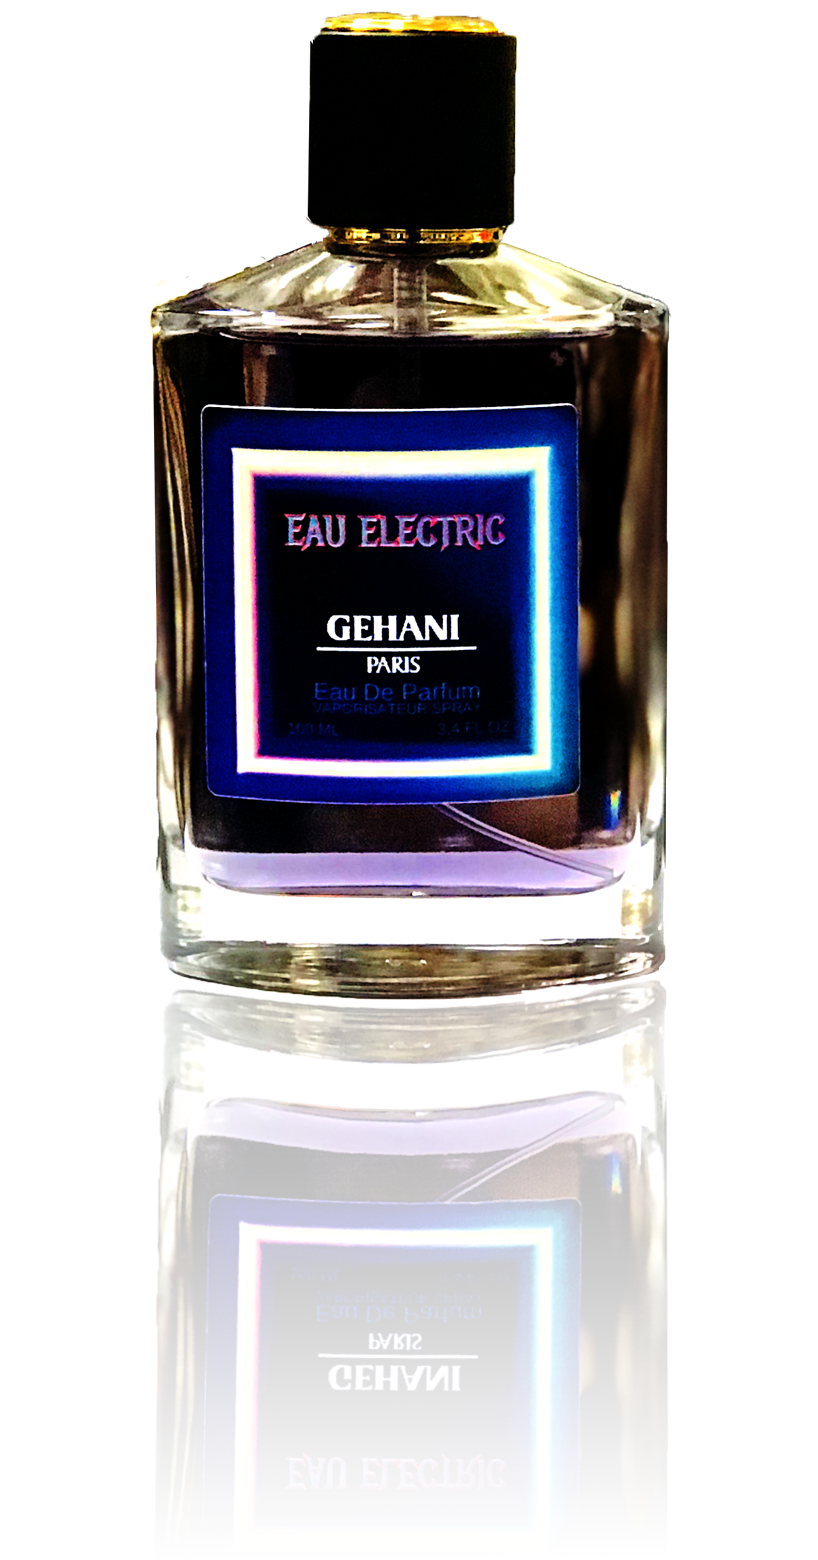 Gehani Eau Electric 3.4 EDP spray perfume by Gehani Paris